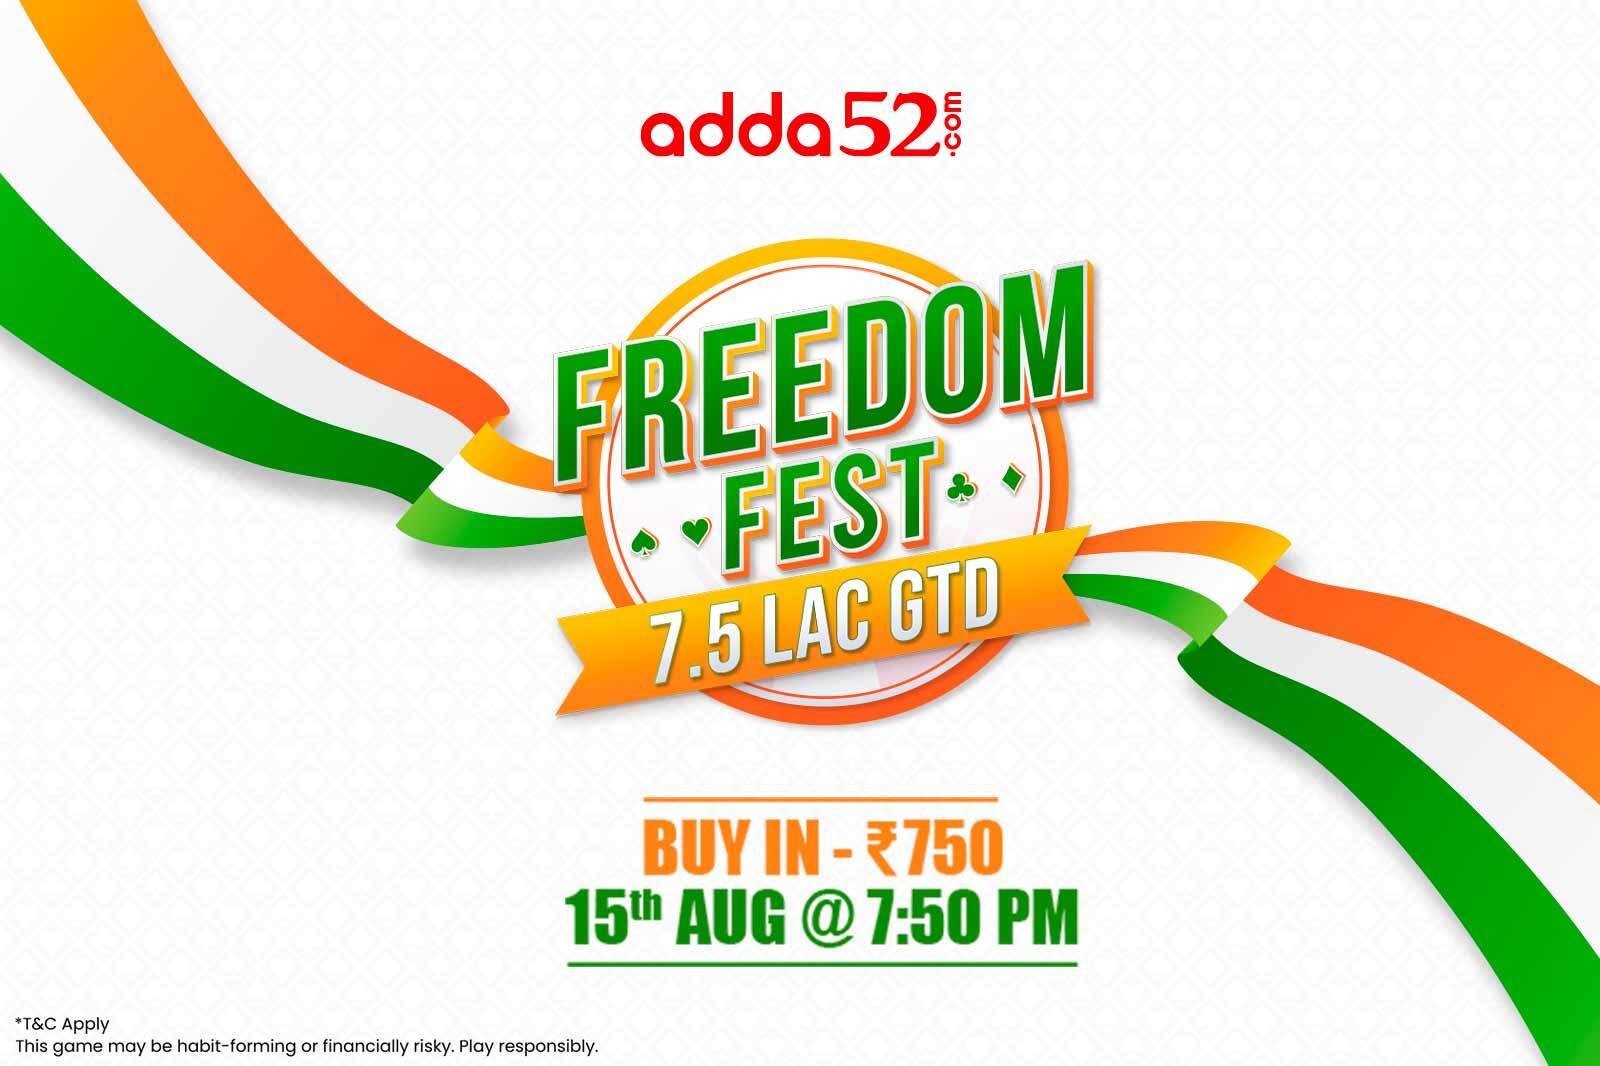 Adda52 announces ‘Freedom Fest’ – an online Poker tournament